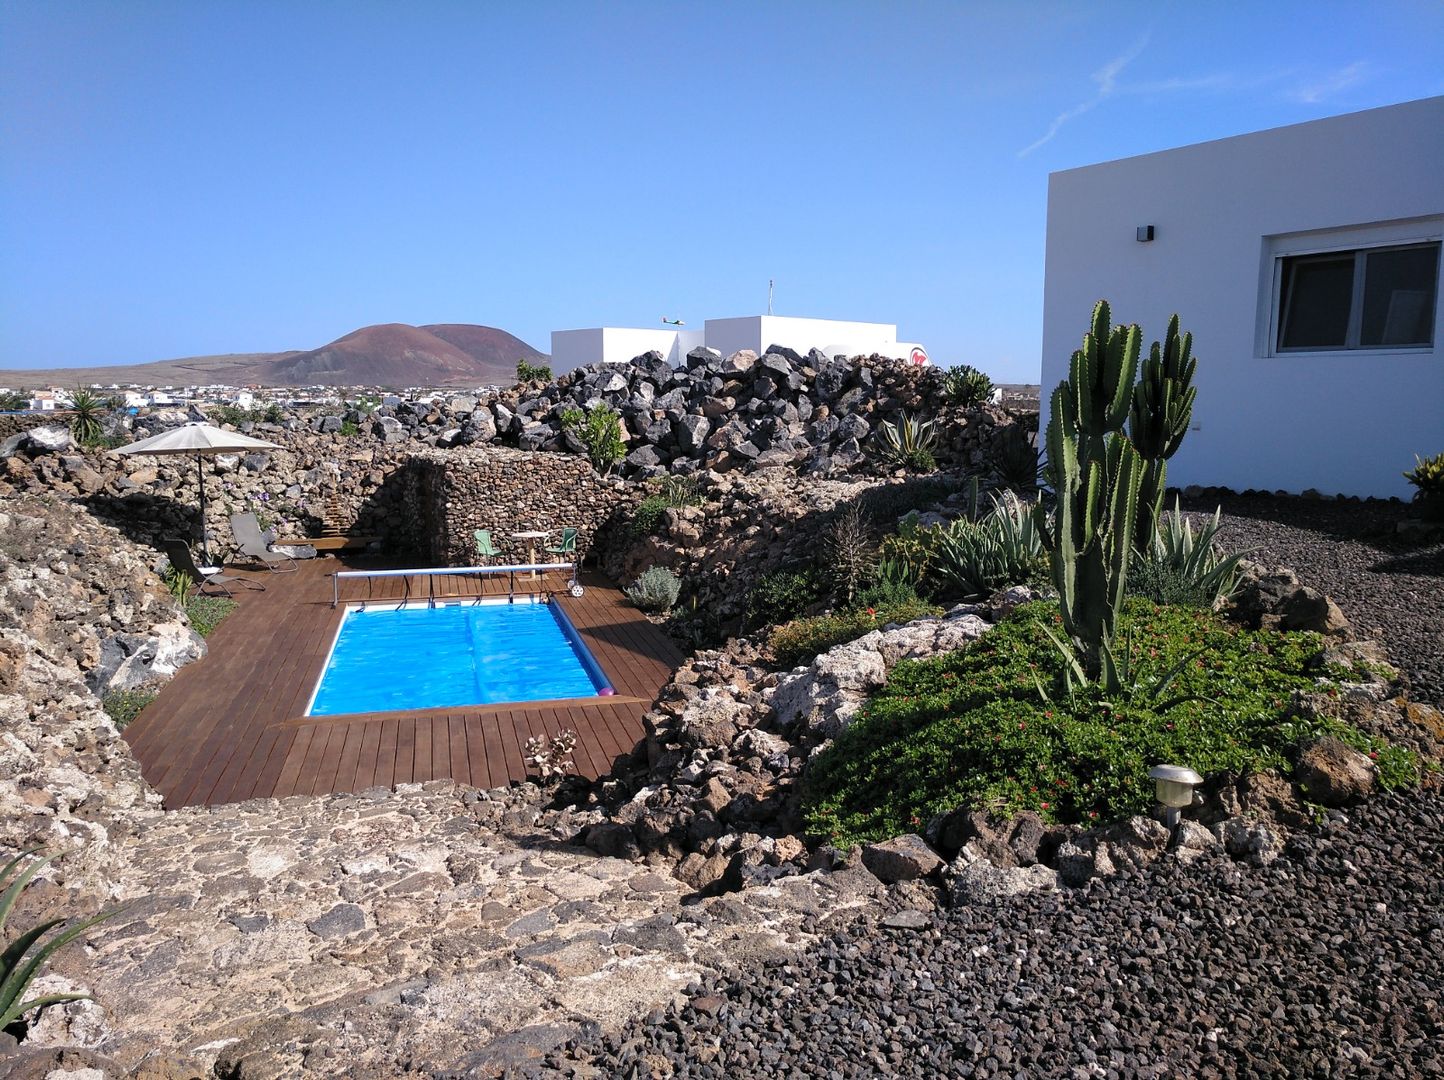 Vivienda con piscina, TZ-Arquitectura TZ-Arquitectura Vườn đá